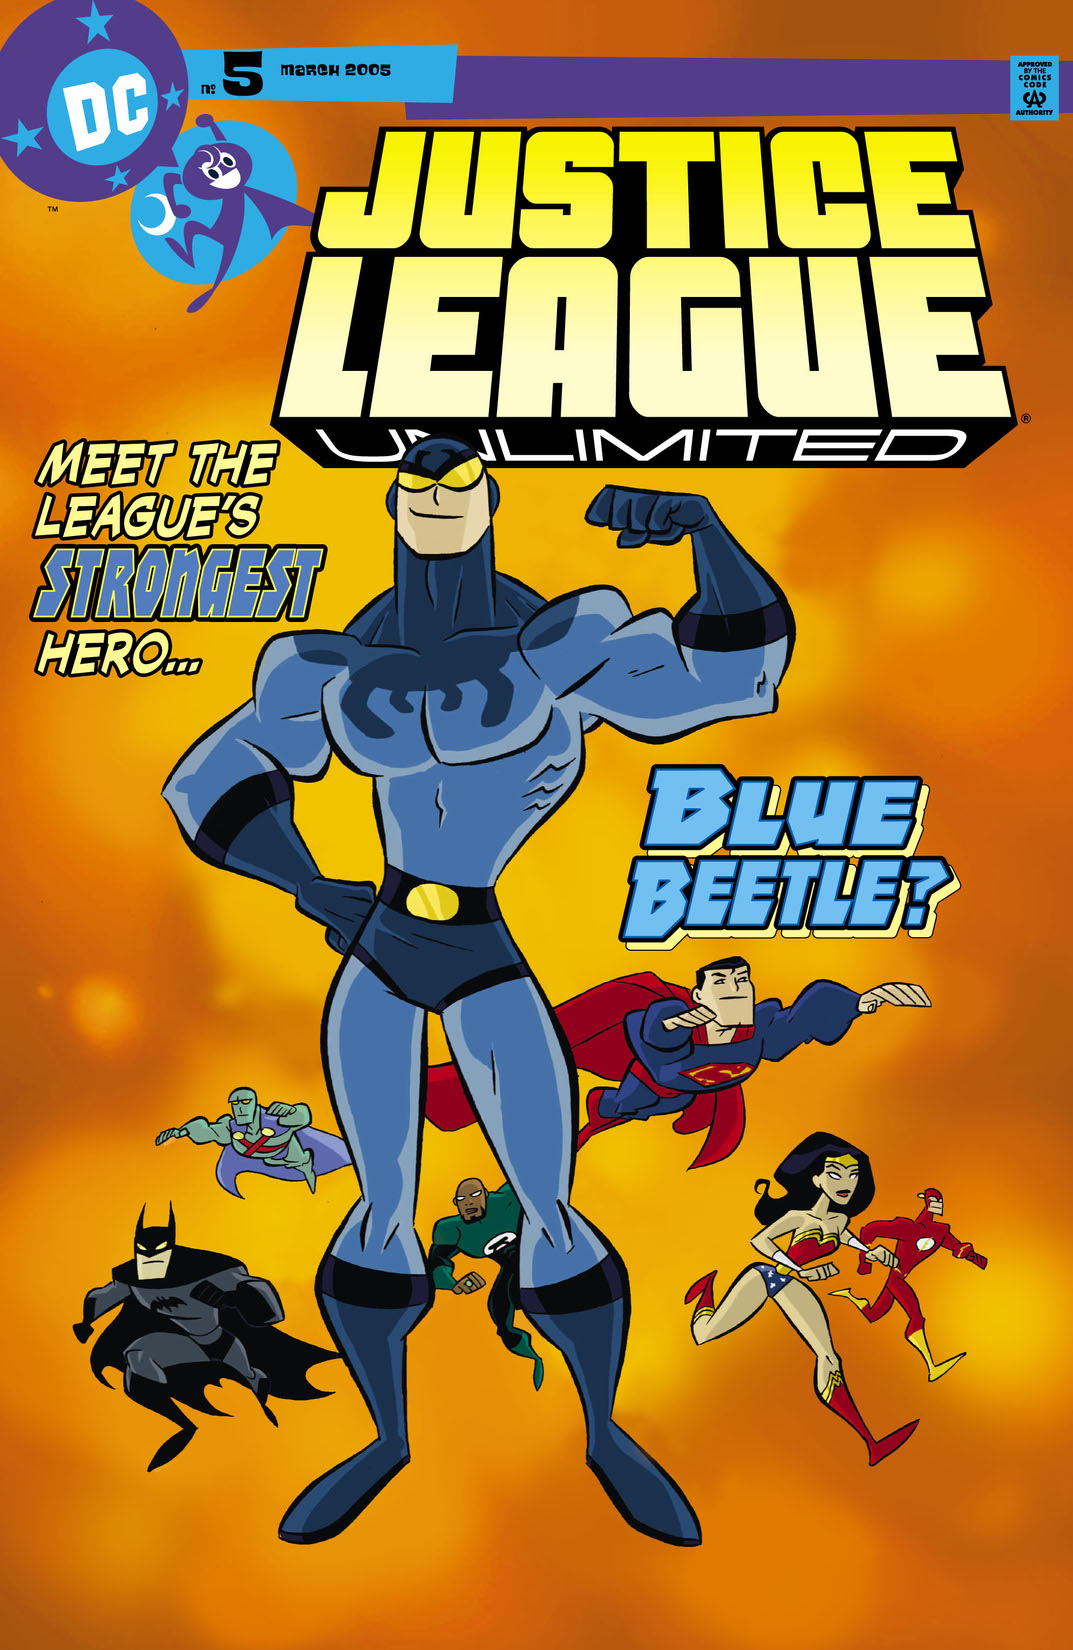 Justice League Unlimited #5 preview images